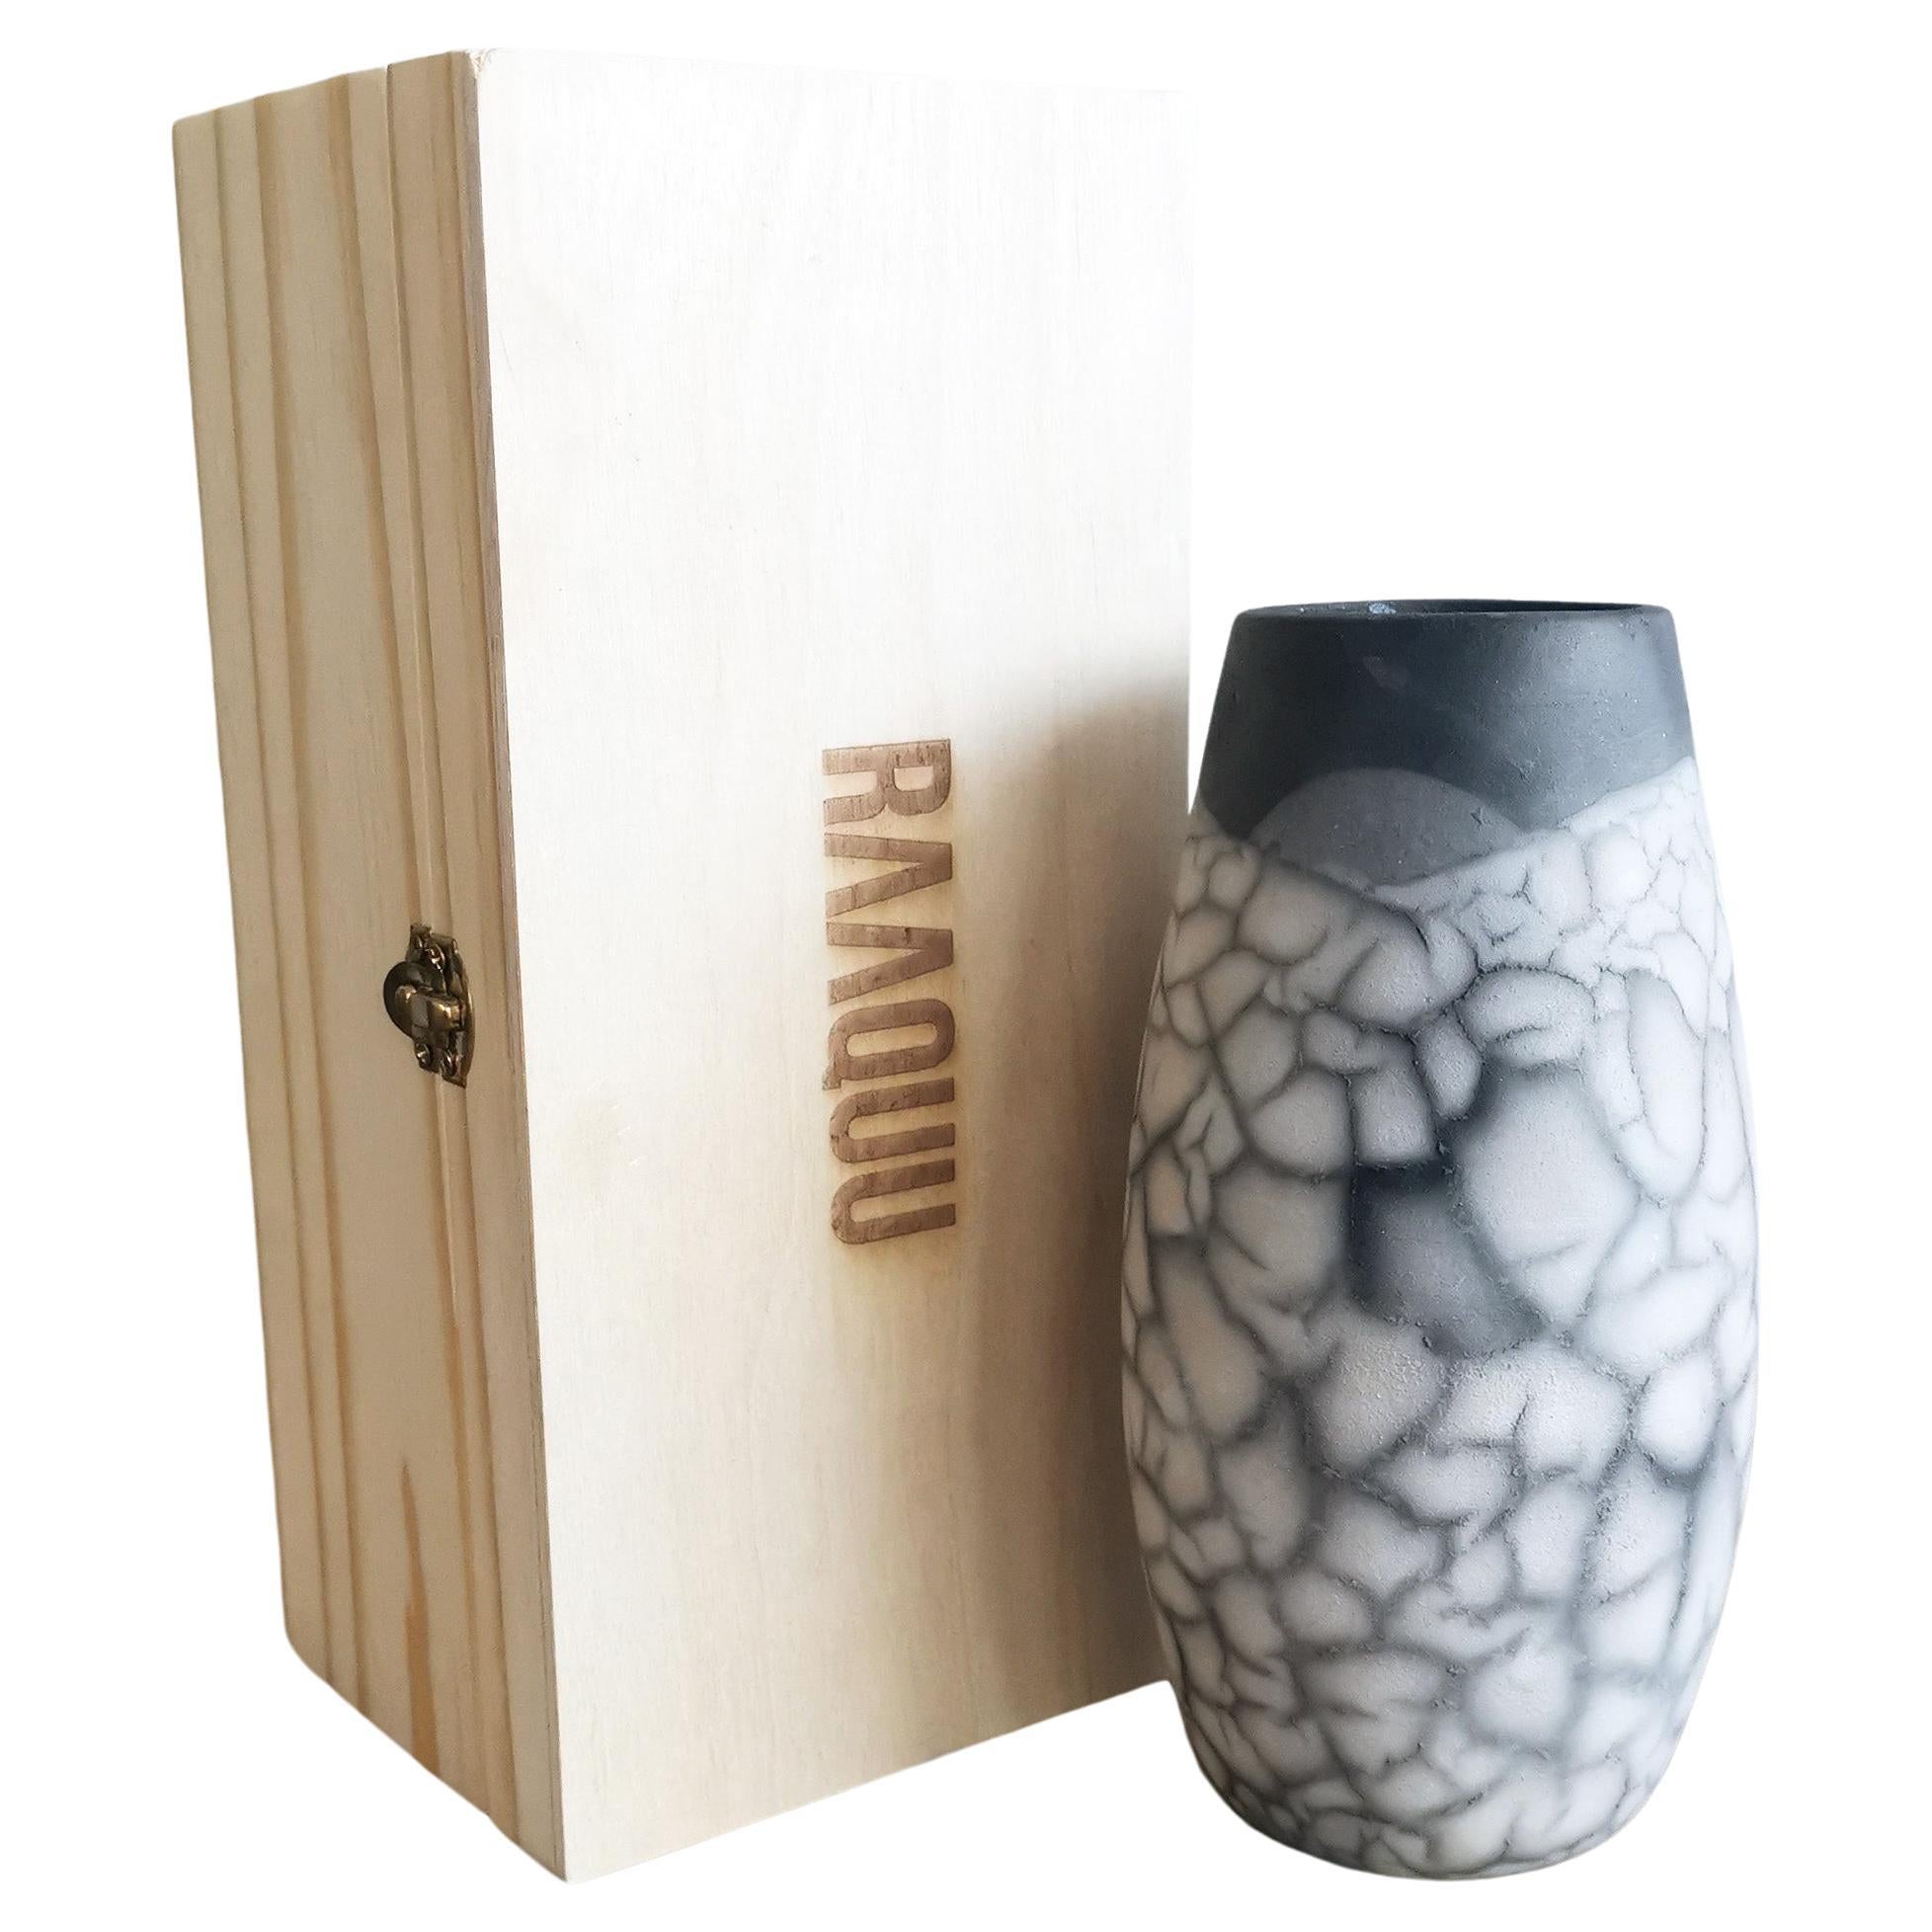 Tsuri Raku Pottery Vase with Gift Box, Smoked Raku, Handmade Ceramic For Sale